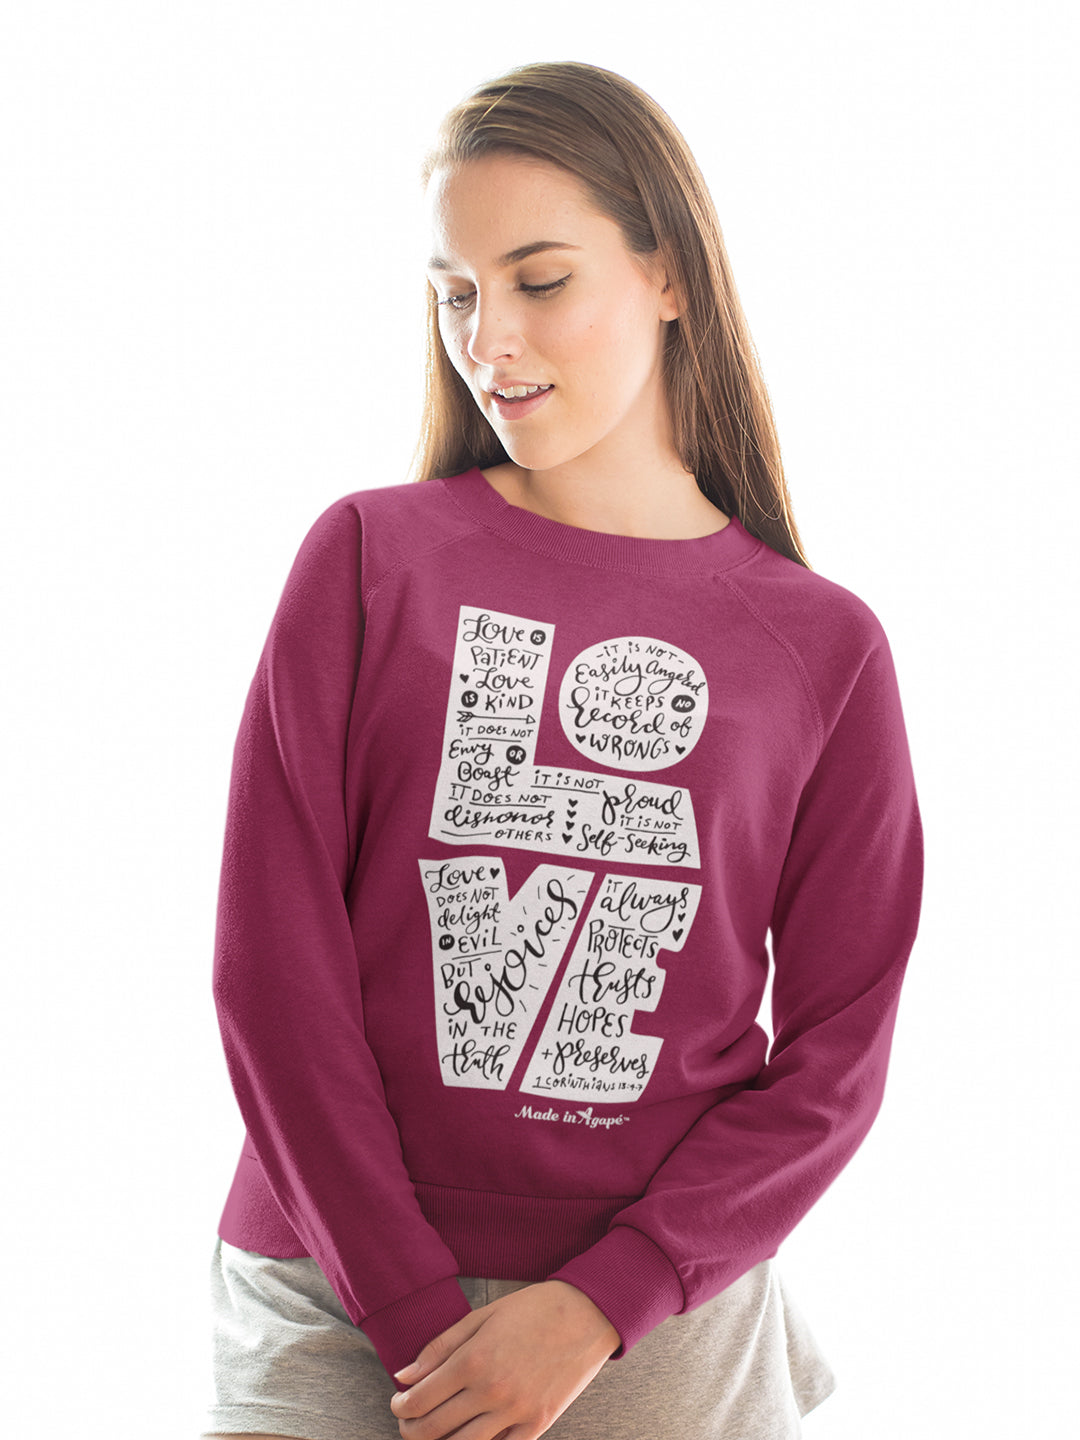 Shop Christian Sweatshirts For Women  Women's Christian Sweaters - Made In  Agapé